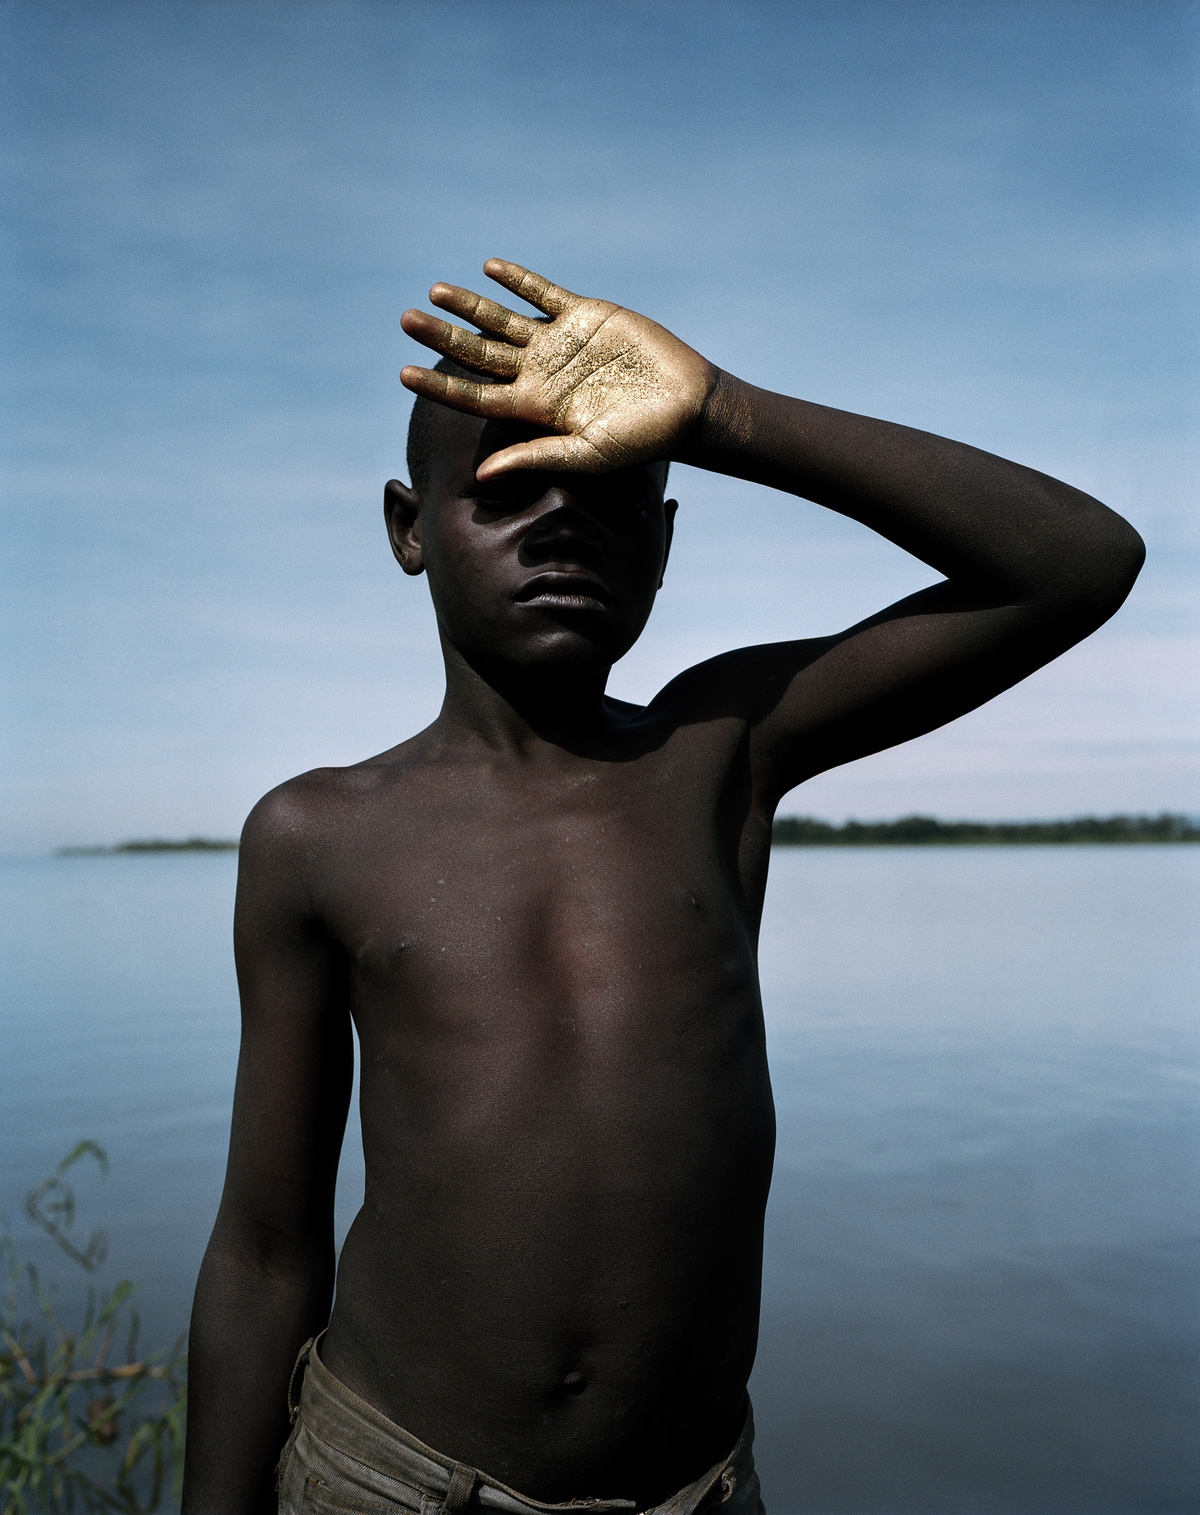 photographer viviane sassen brings africa to amsterdam